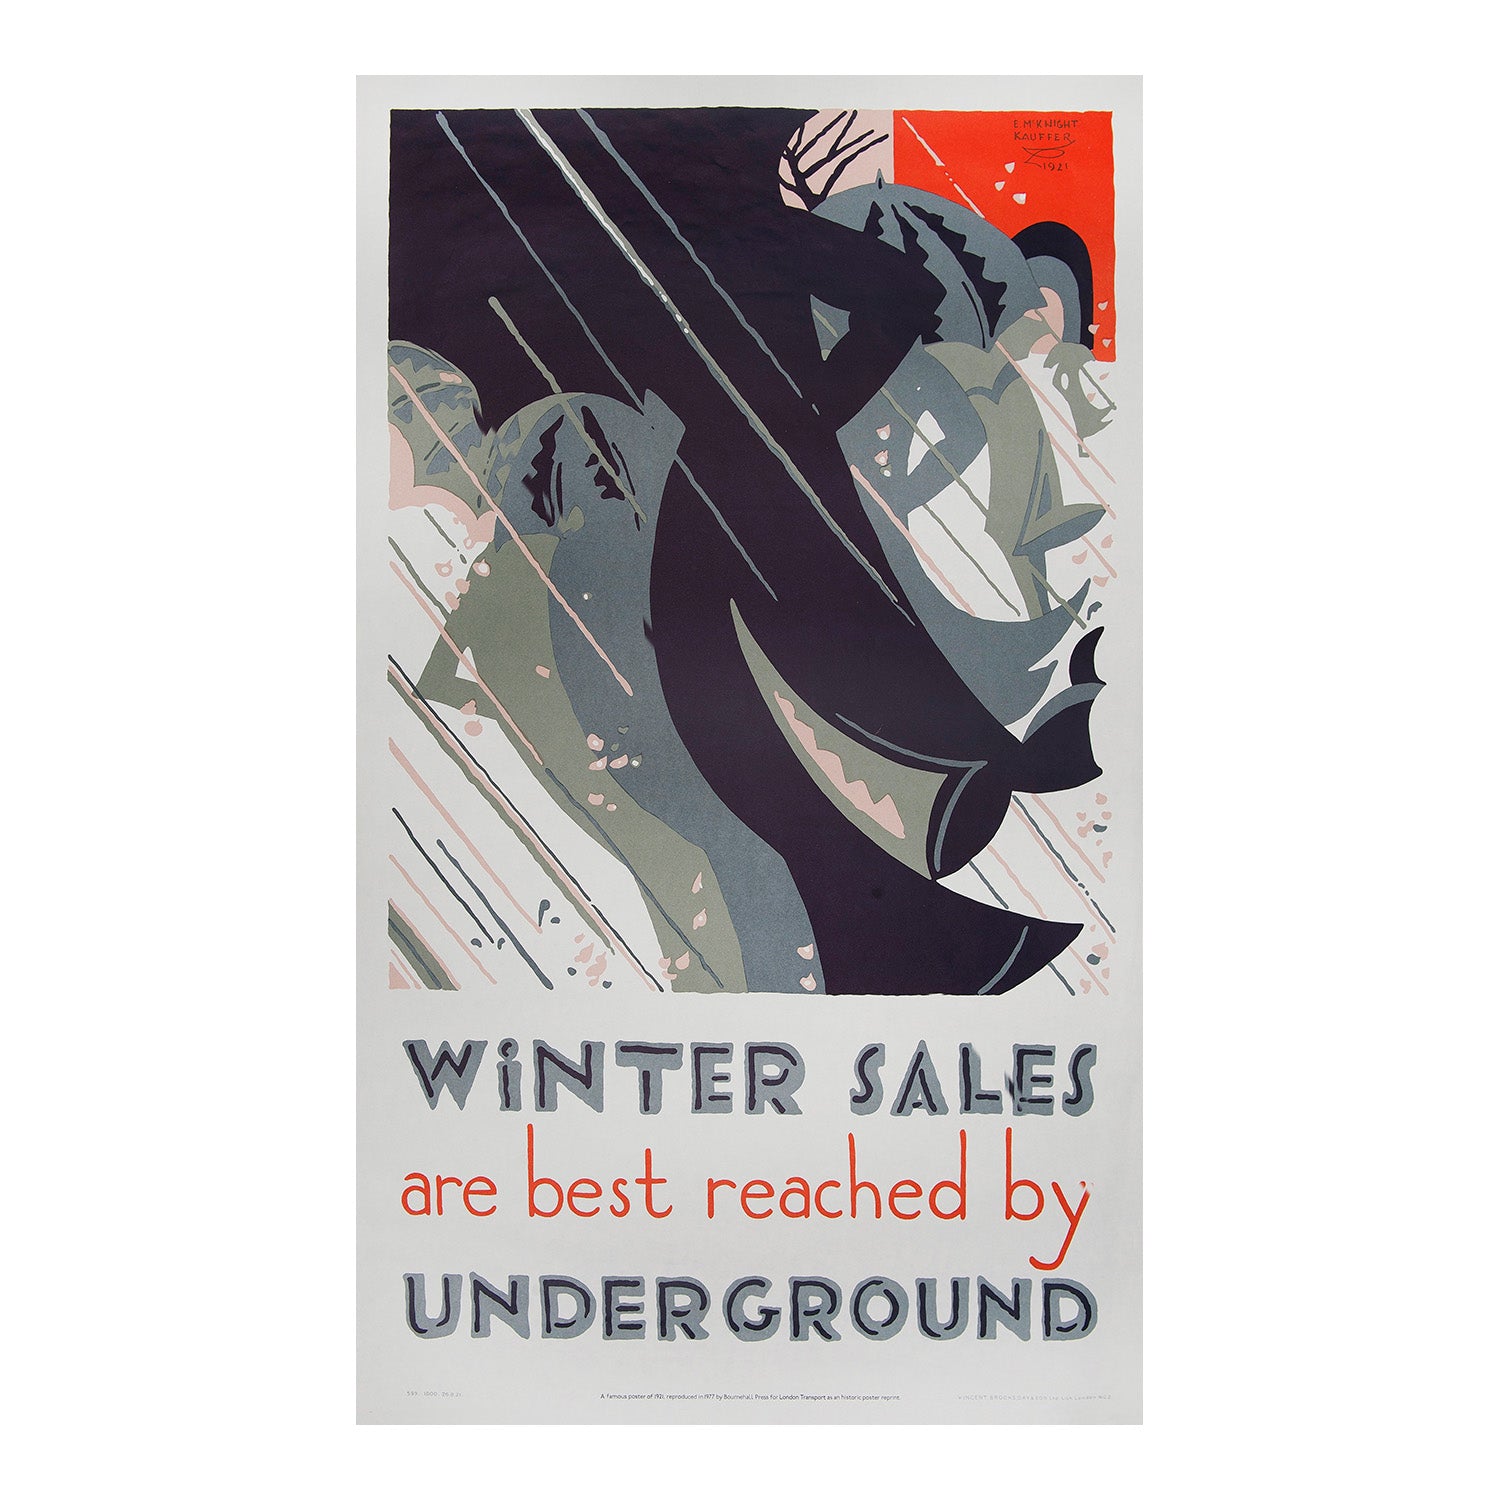 Winter Sales are best reached by Underground